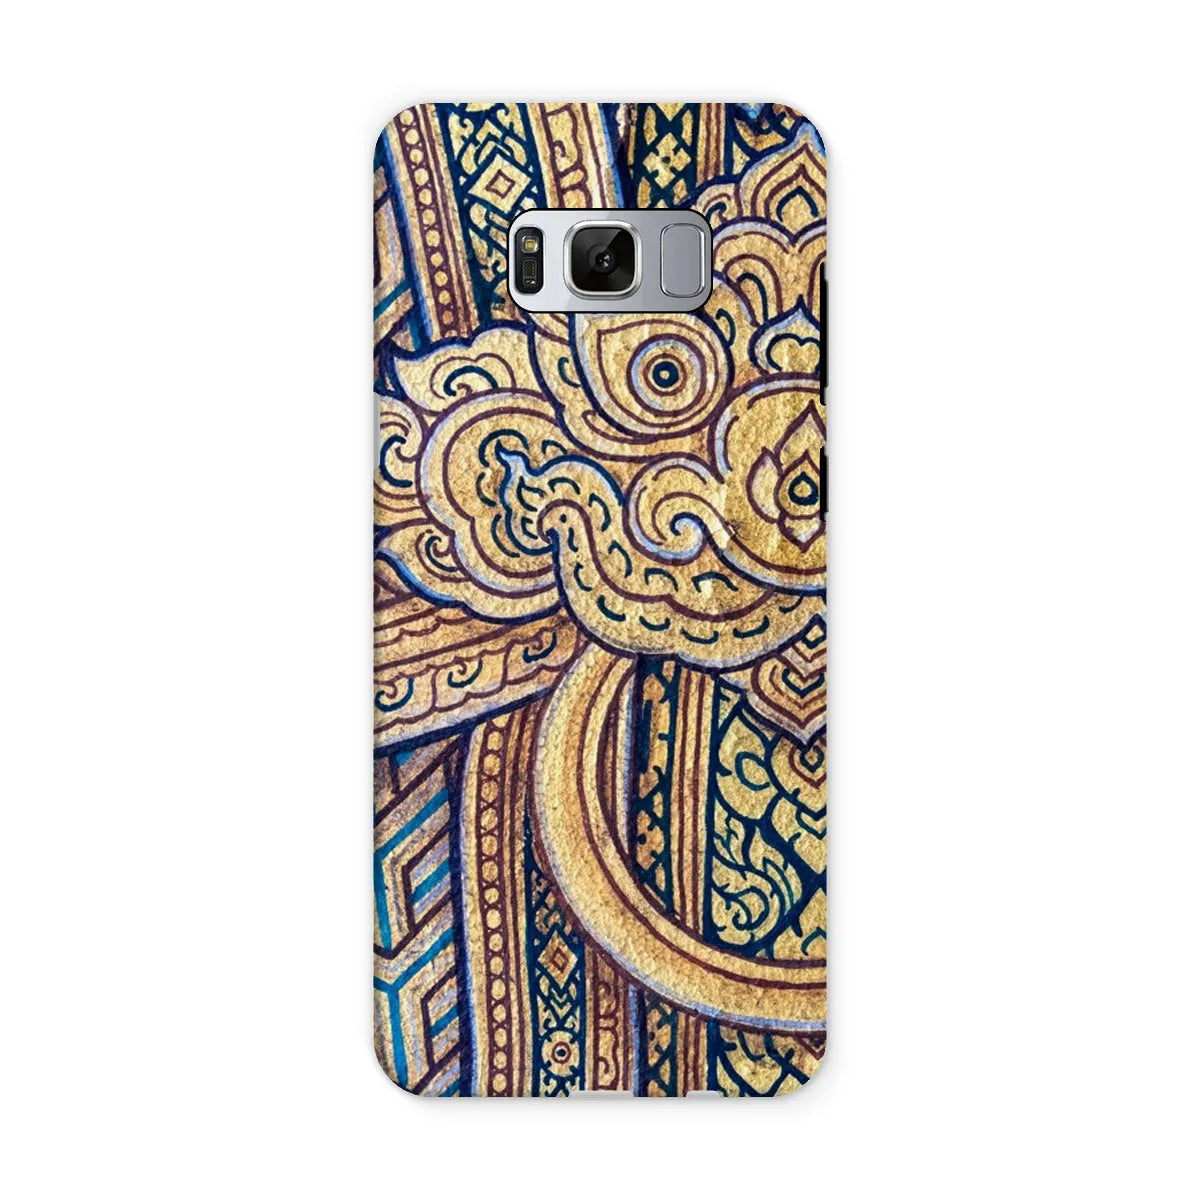 Man’s Best Friend - Thai Aesthetic Art Phone Case - Samsung Galaxy S8 / Matte - Mobile Phone Cases - Aesthetic Art